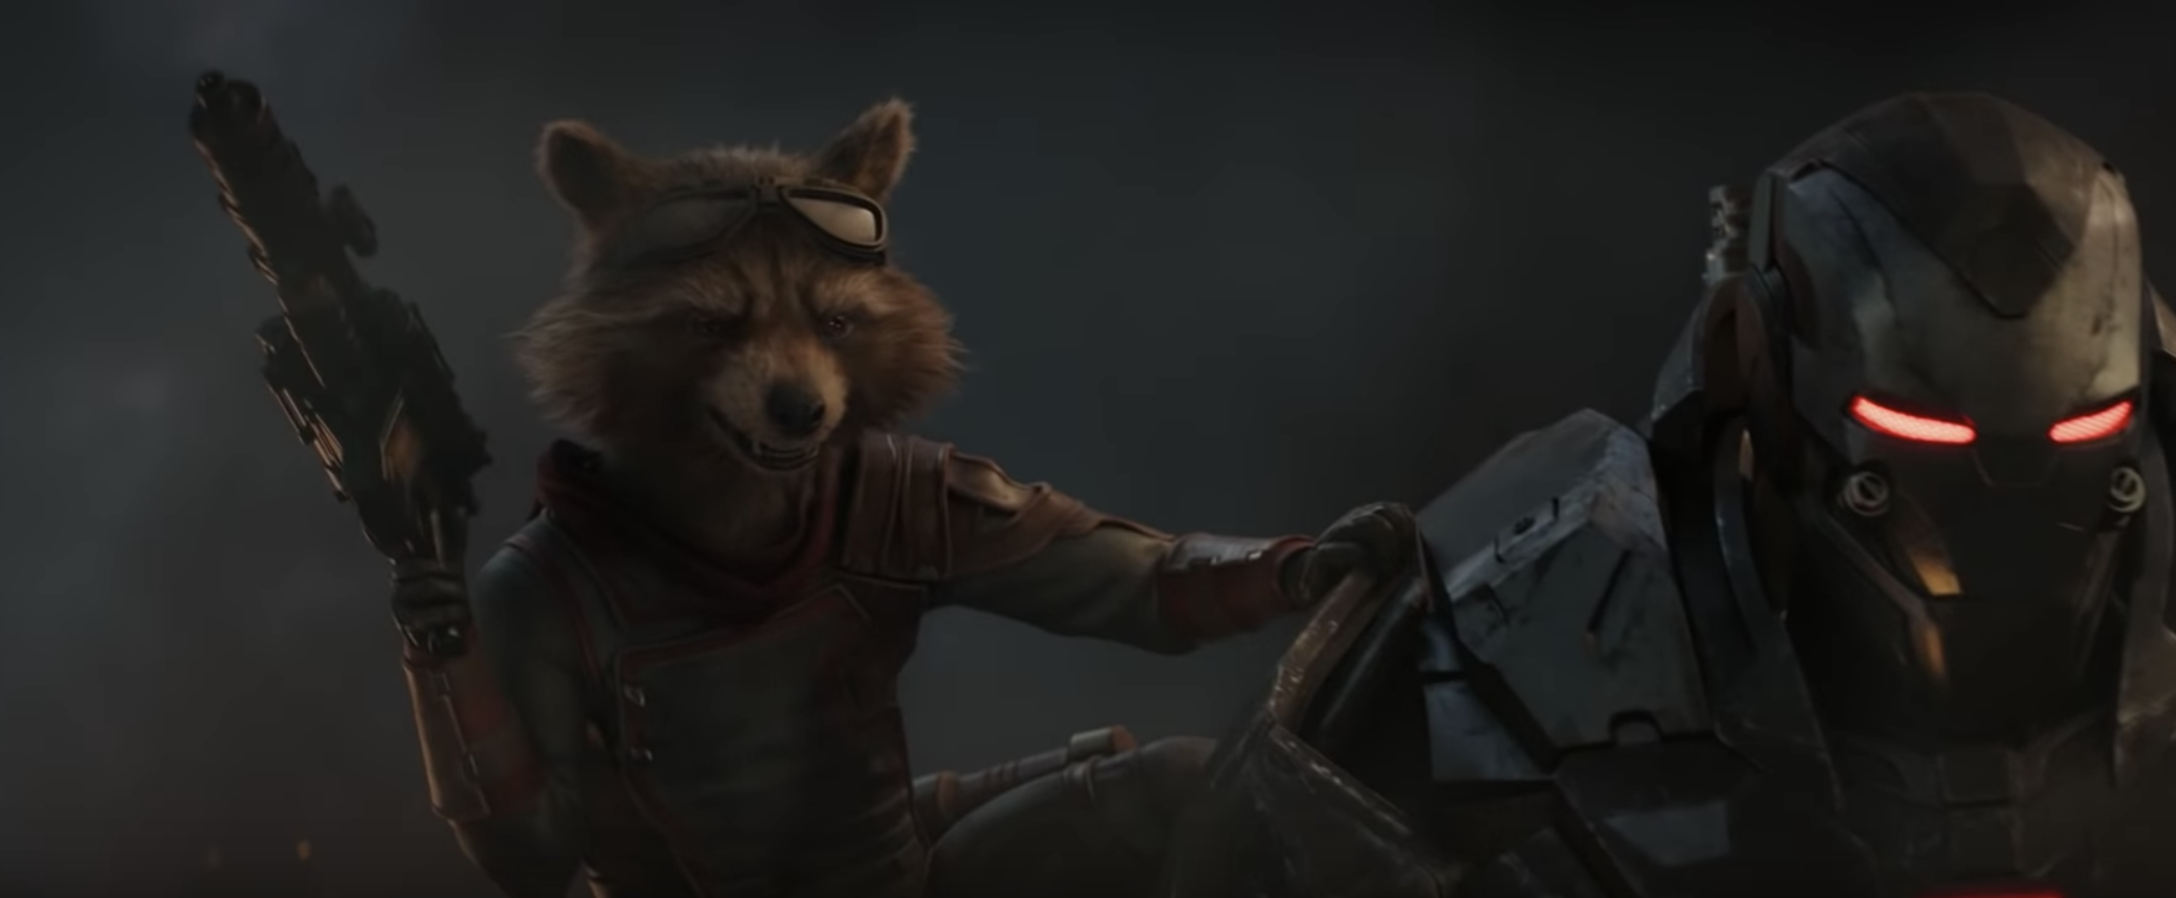 Rocket Raccoon wears classic battle armour in Avengers: Endgame trailer